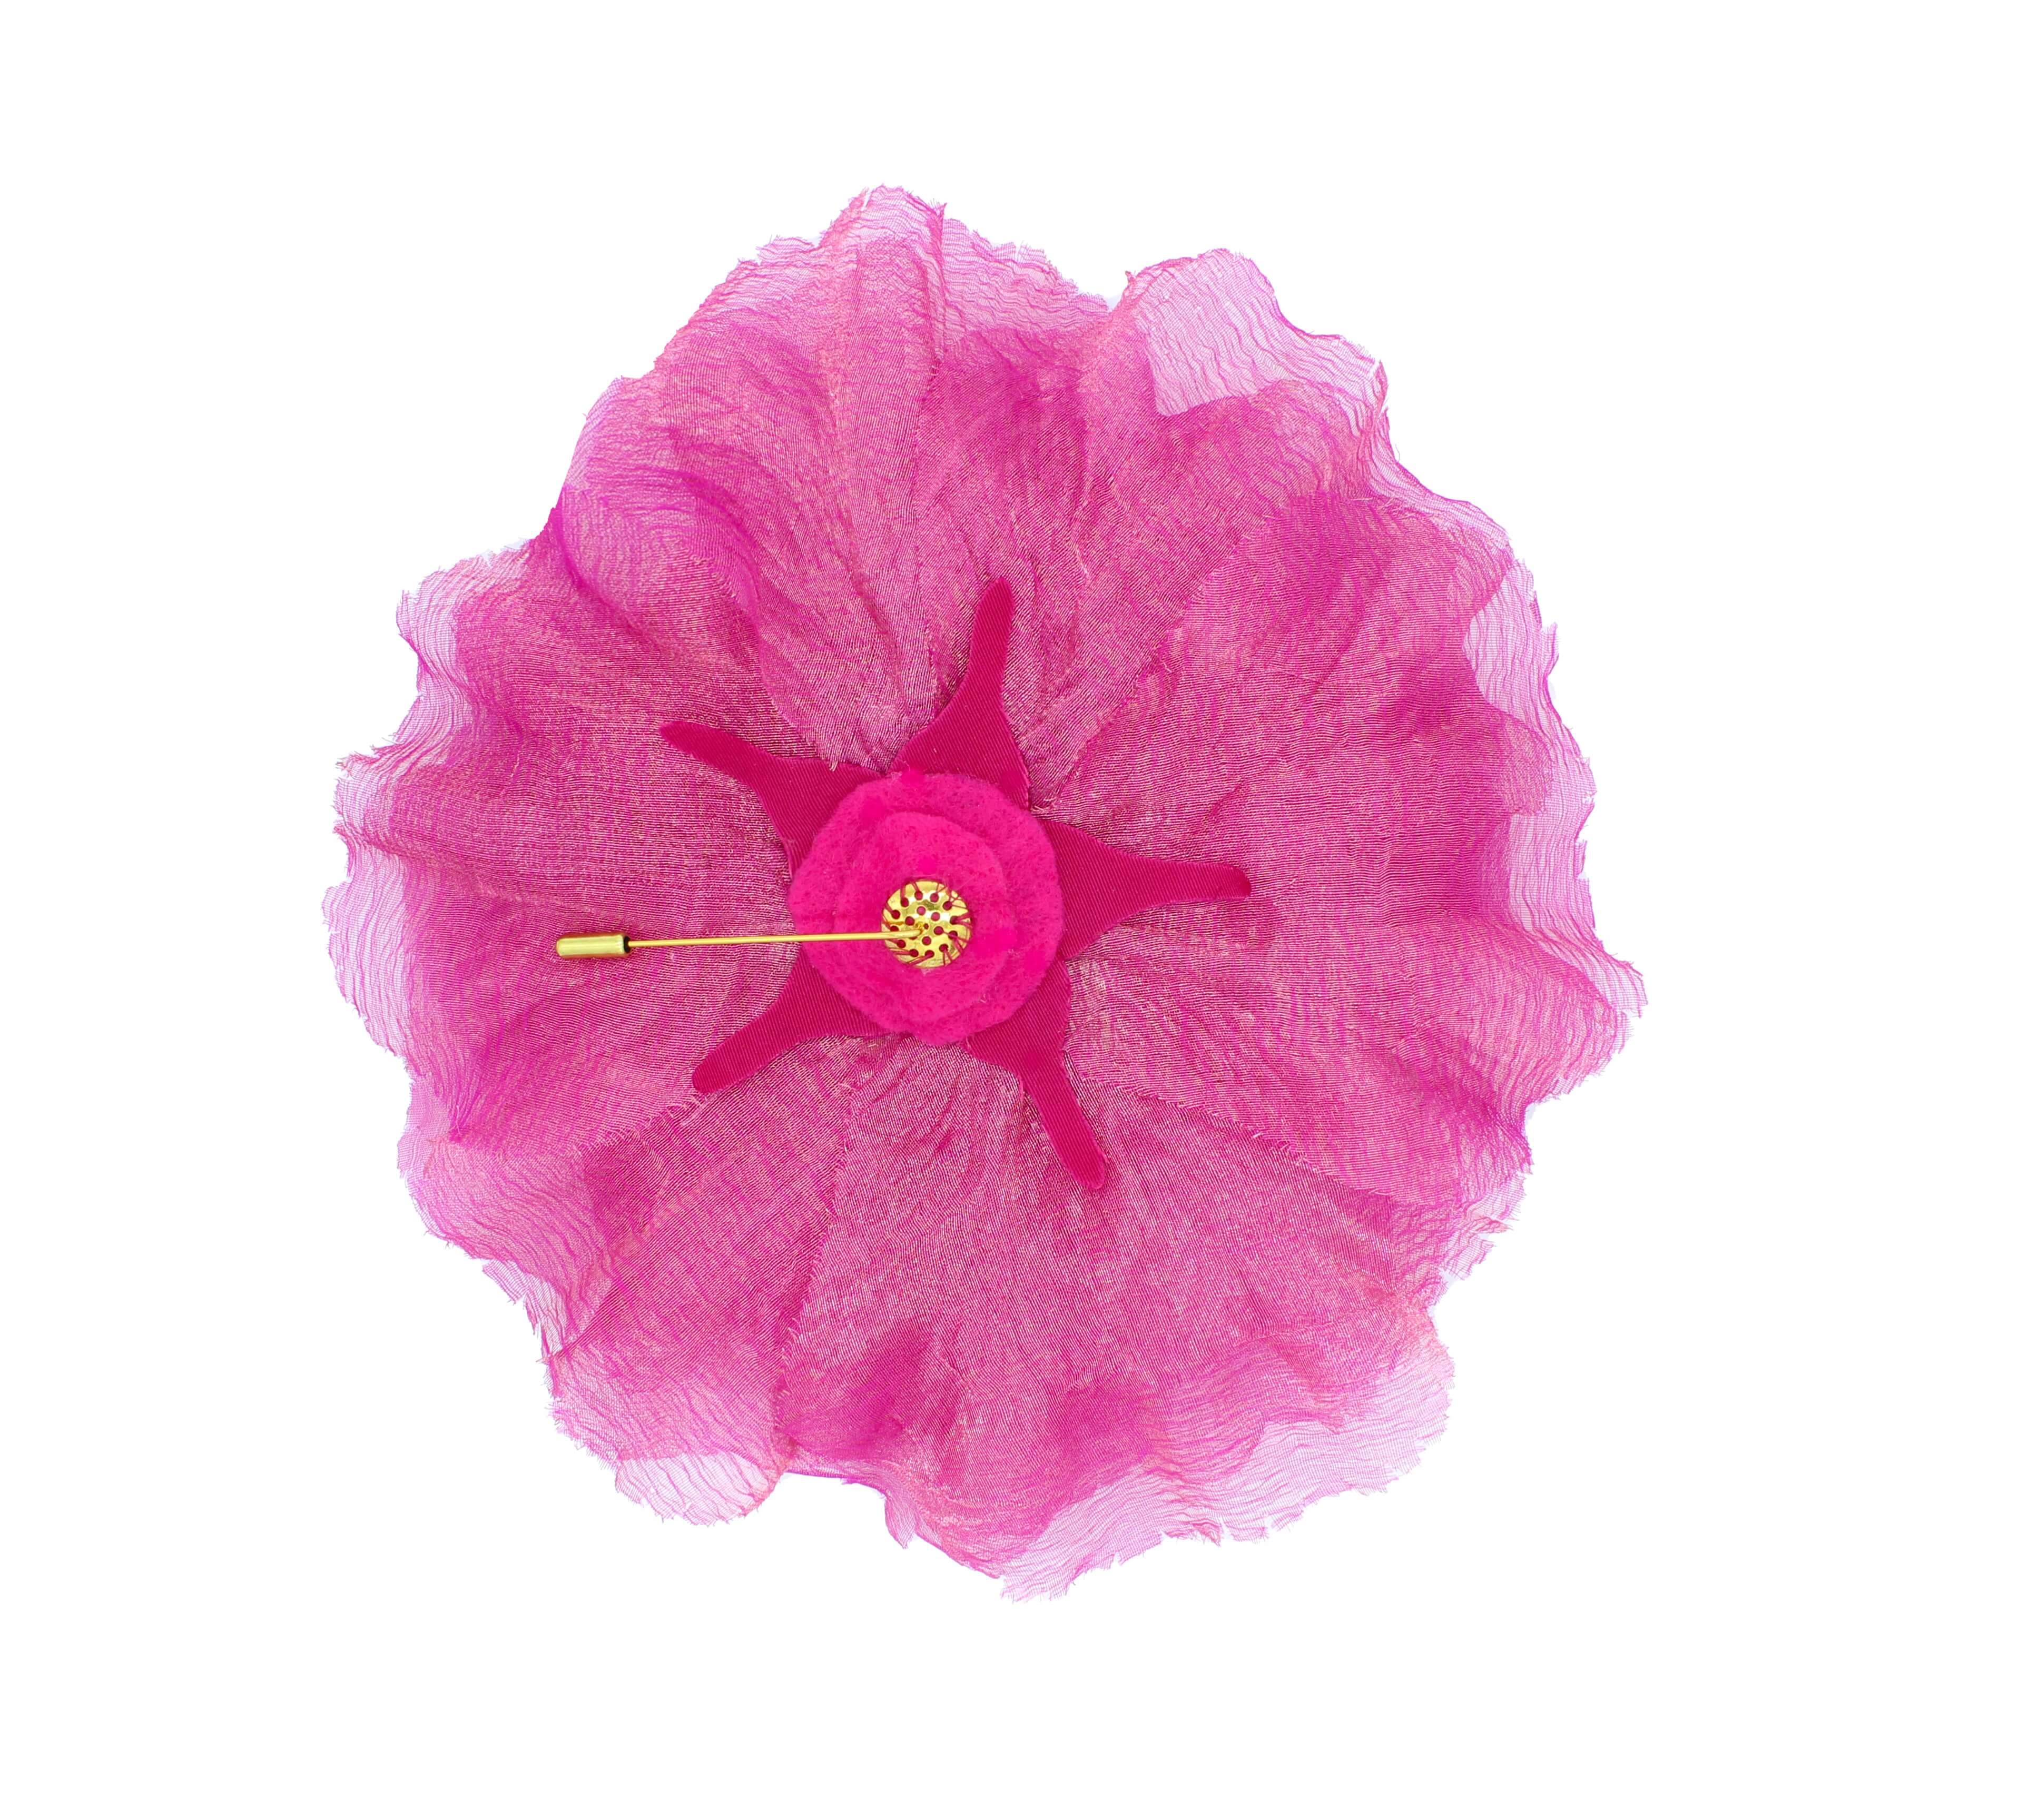 Pre-Order Beah Fuchsia Silk Carnation Flower Brooch - Women's Accessories : Natalie & Alanna - Women's Clothing & Accesssories